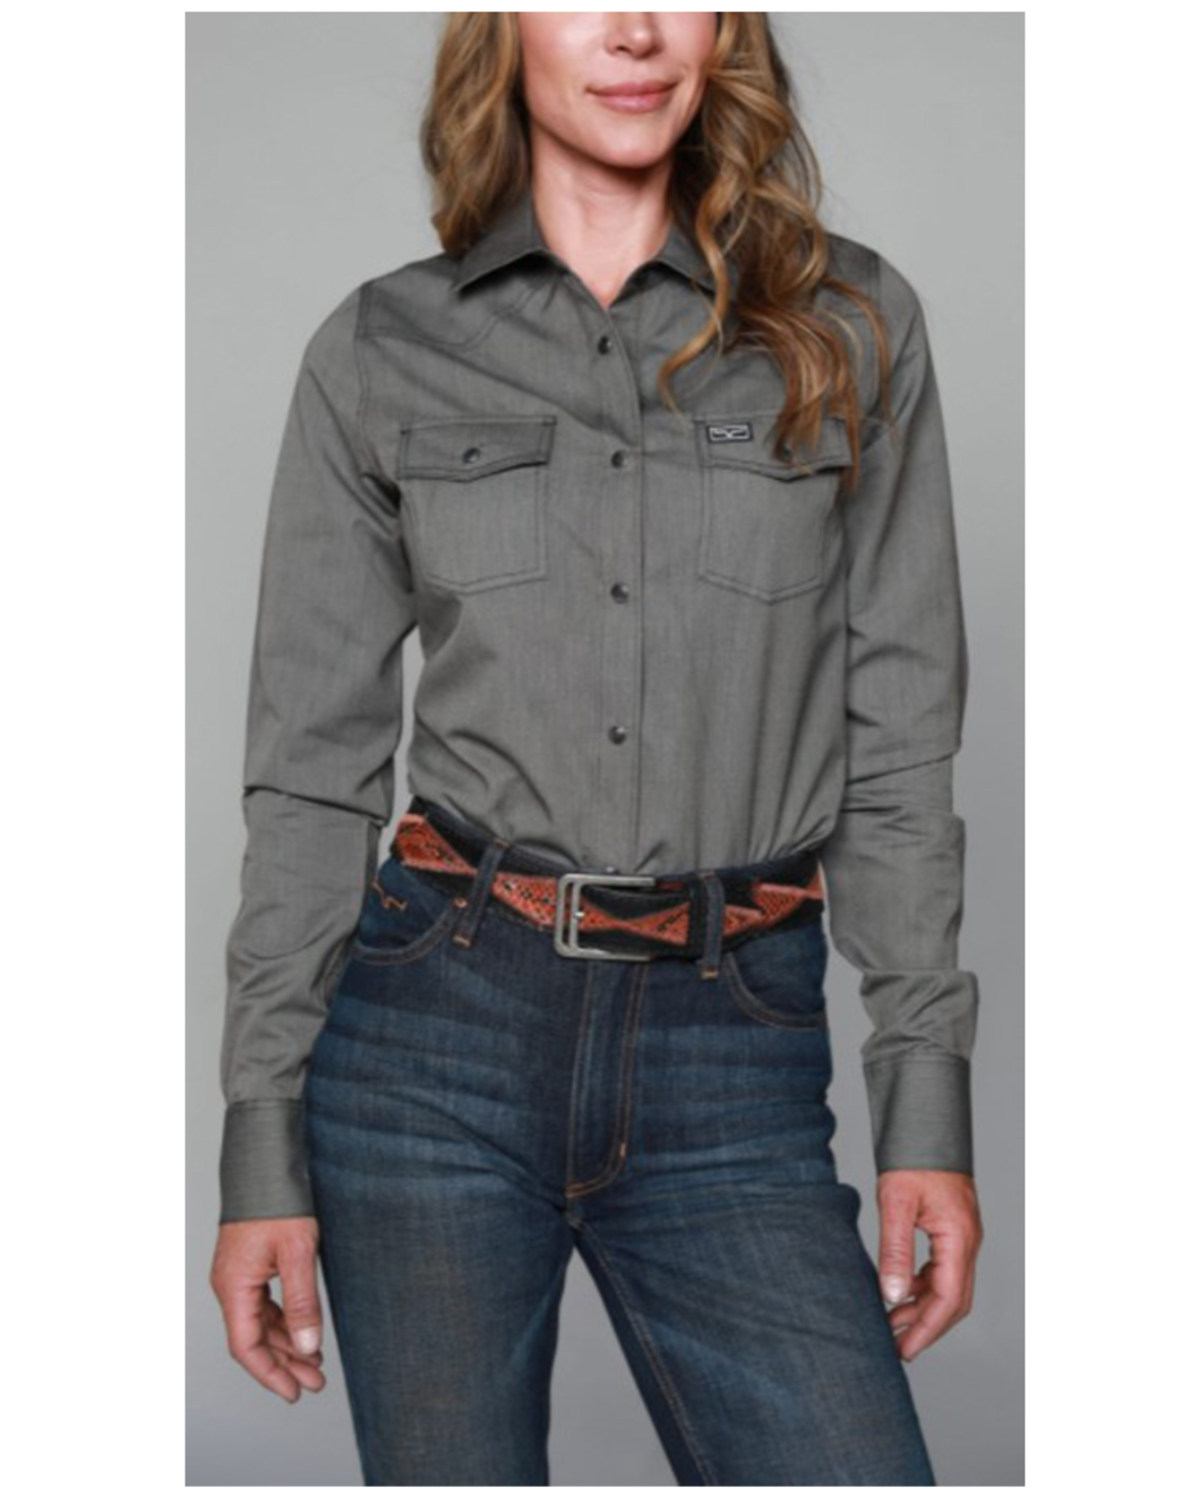 Kimes Ranch Women's Tucson Solid Long Sleeve Snap Western Shirt